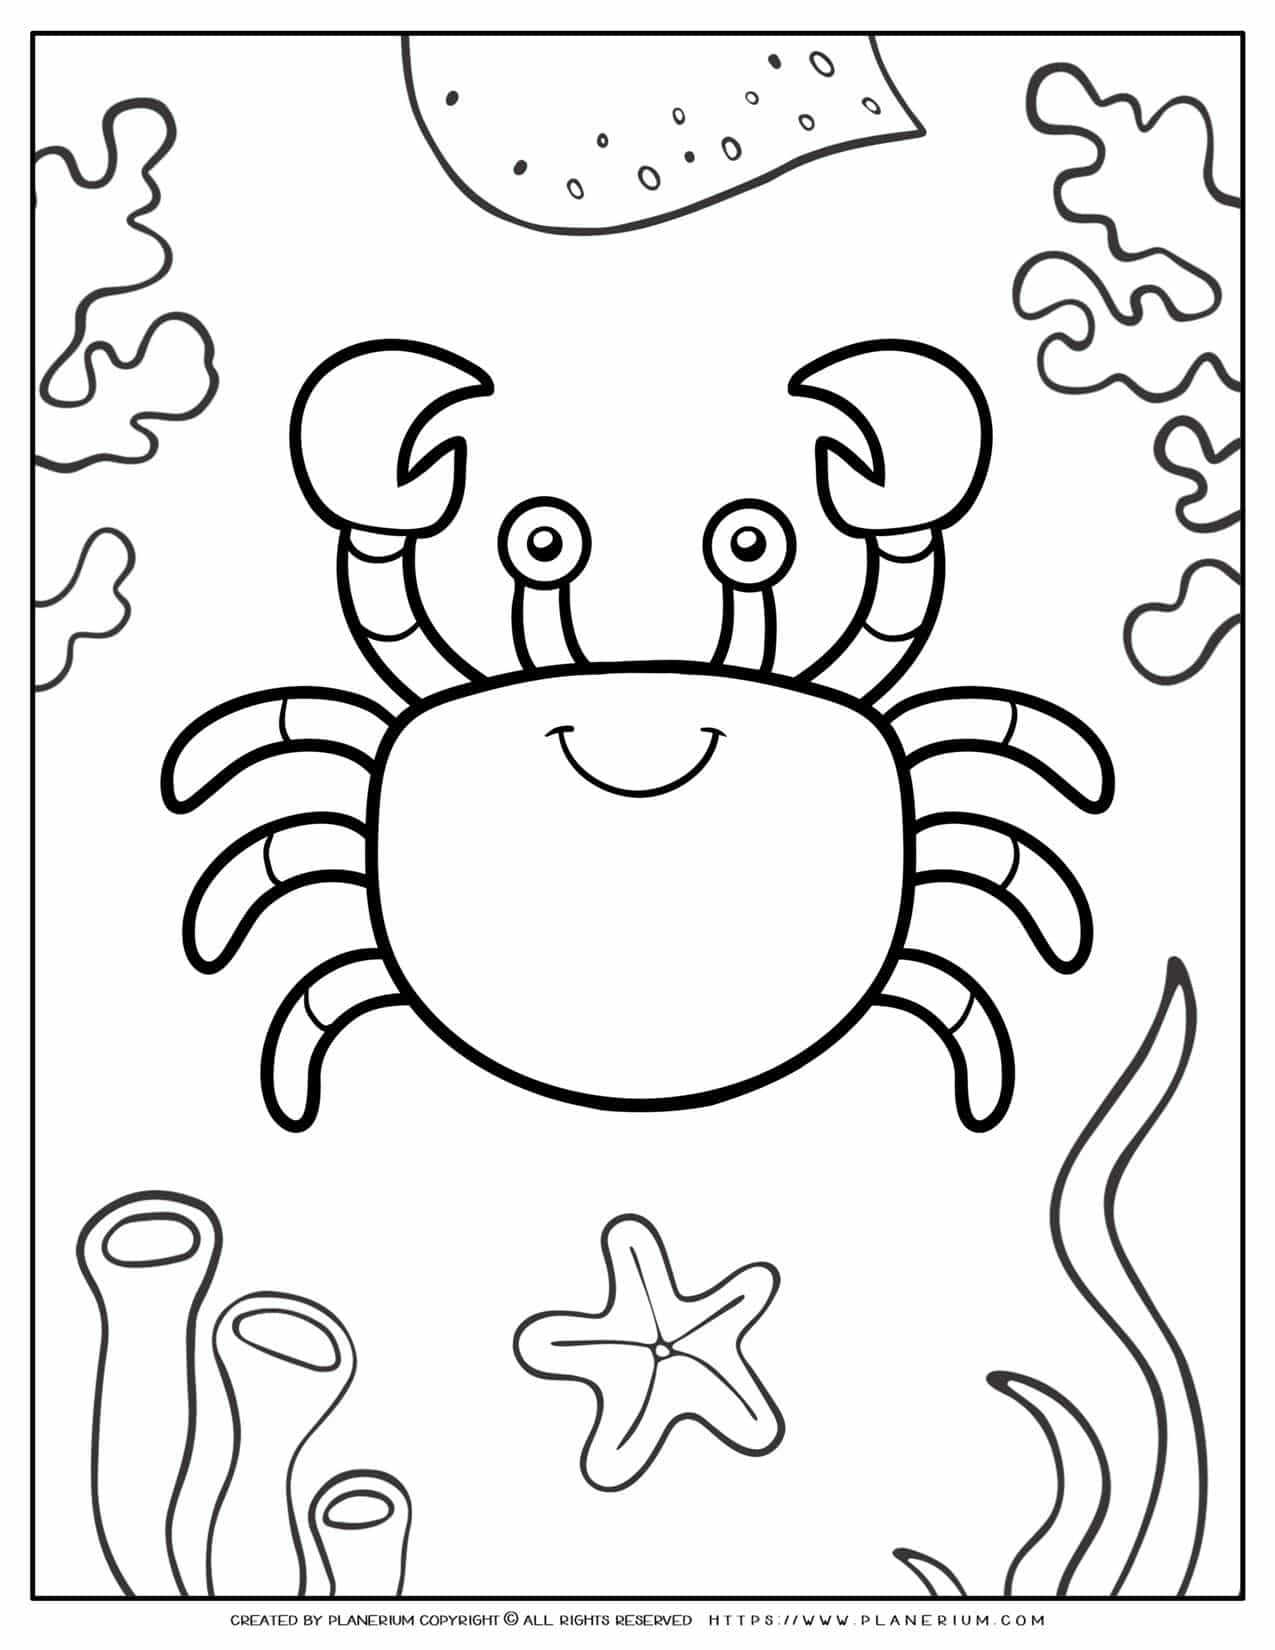 Animals Coloring Page - Crab | Planerium